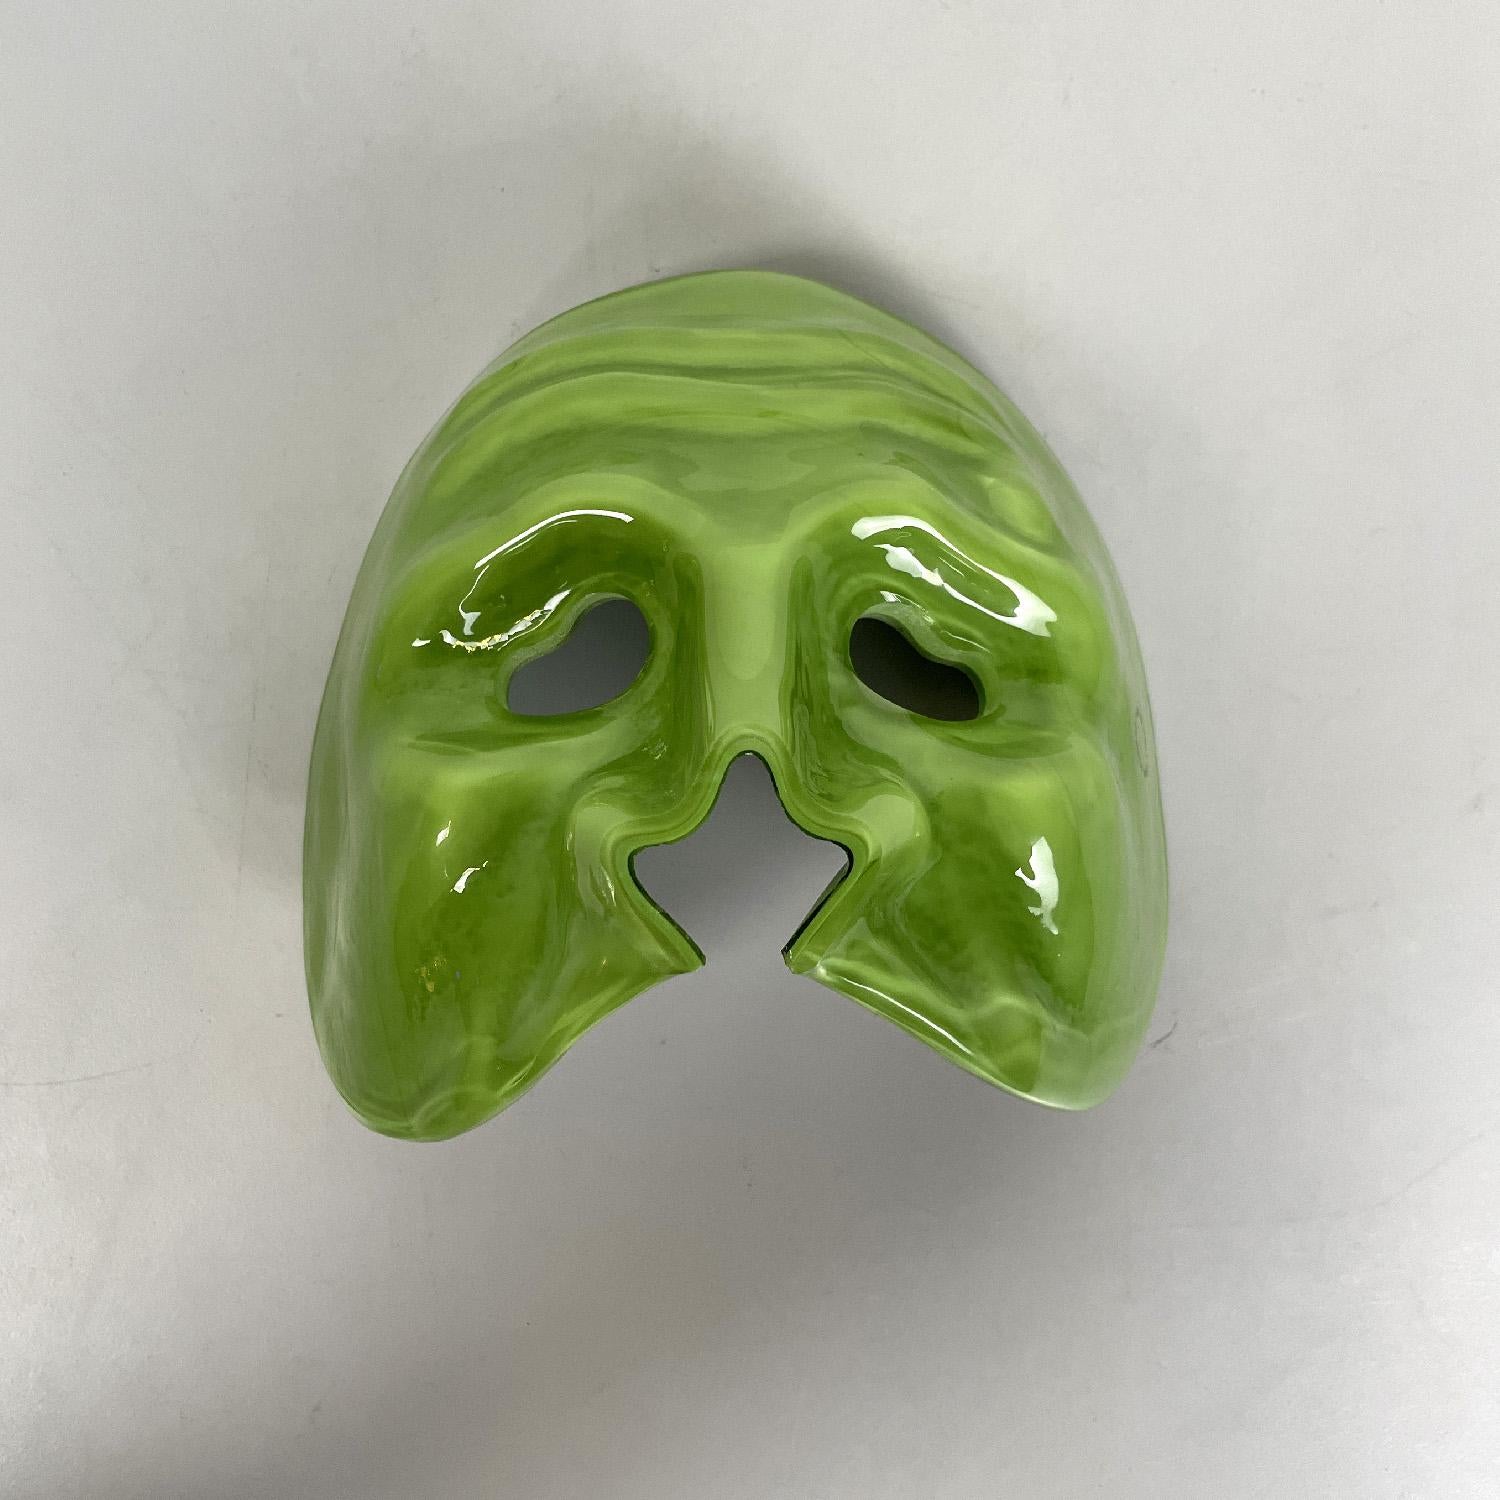 Murano Glass Italian Venetian style mask sculpture in green Murano glass by Venini, 1990s